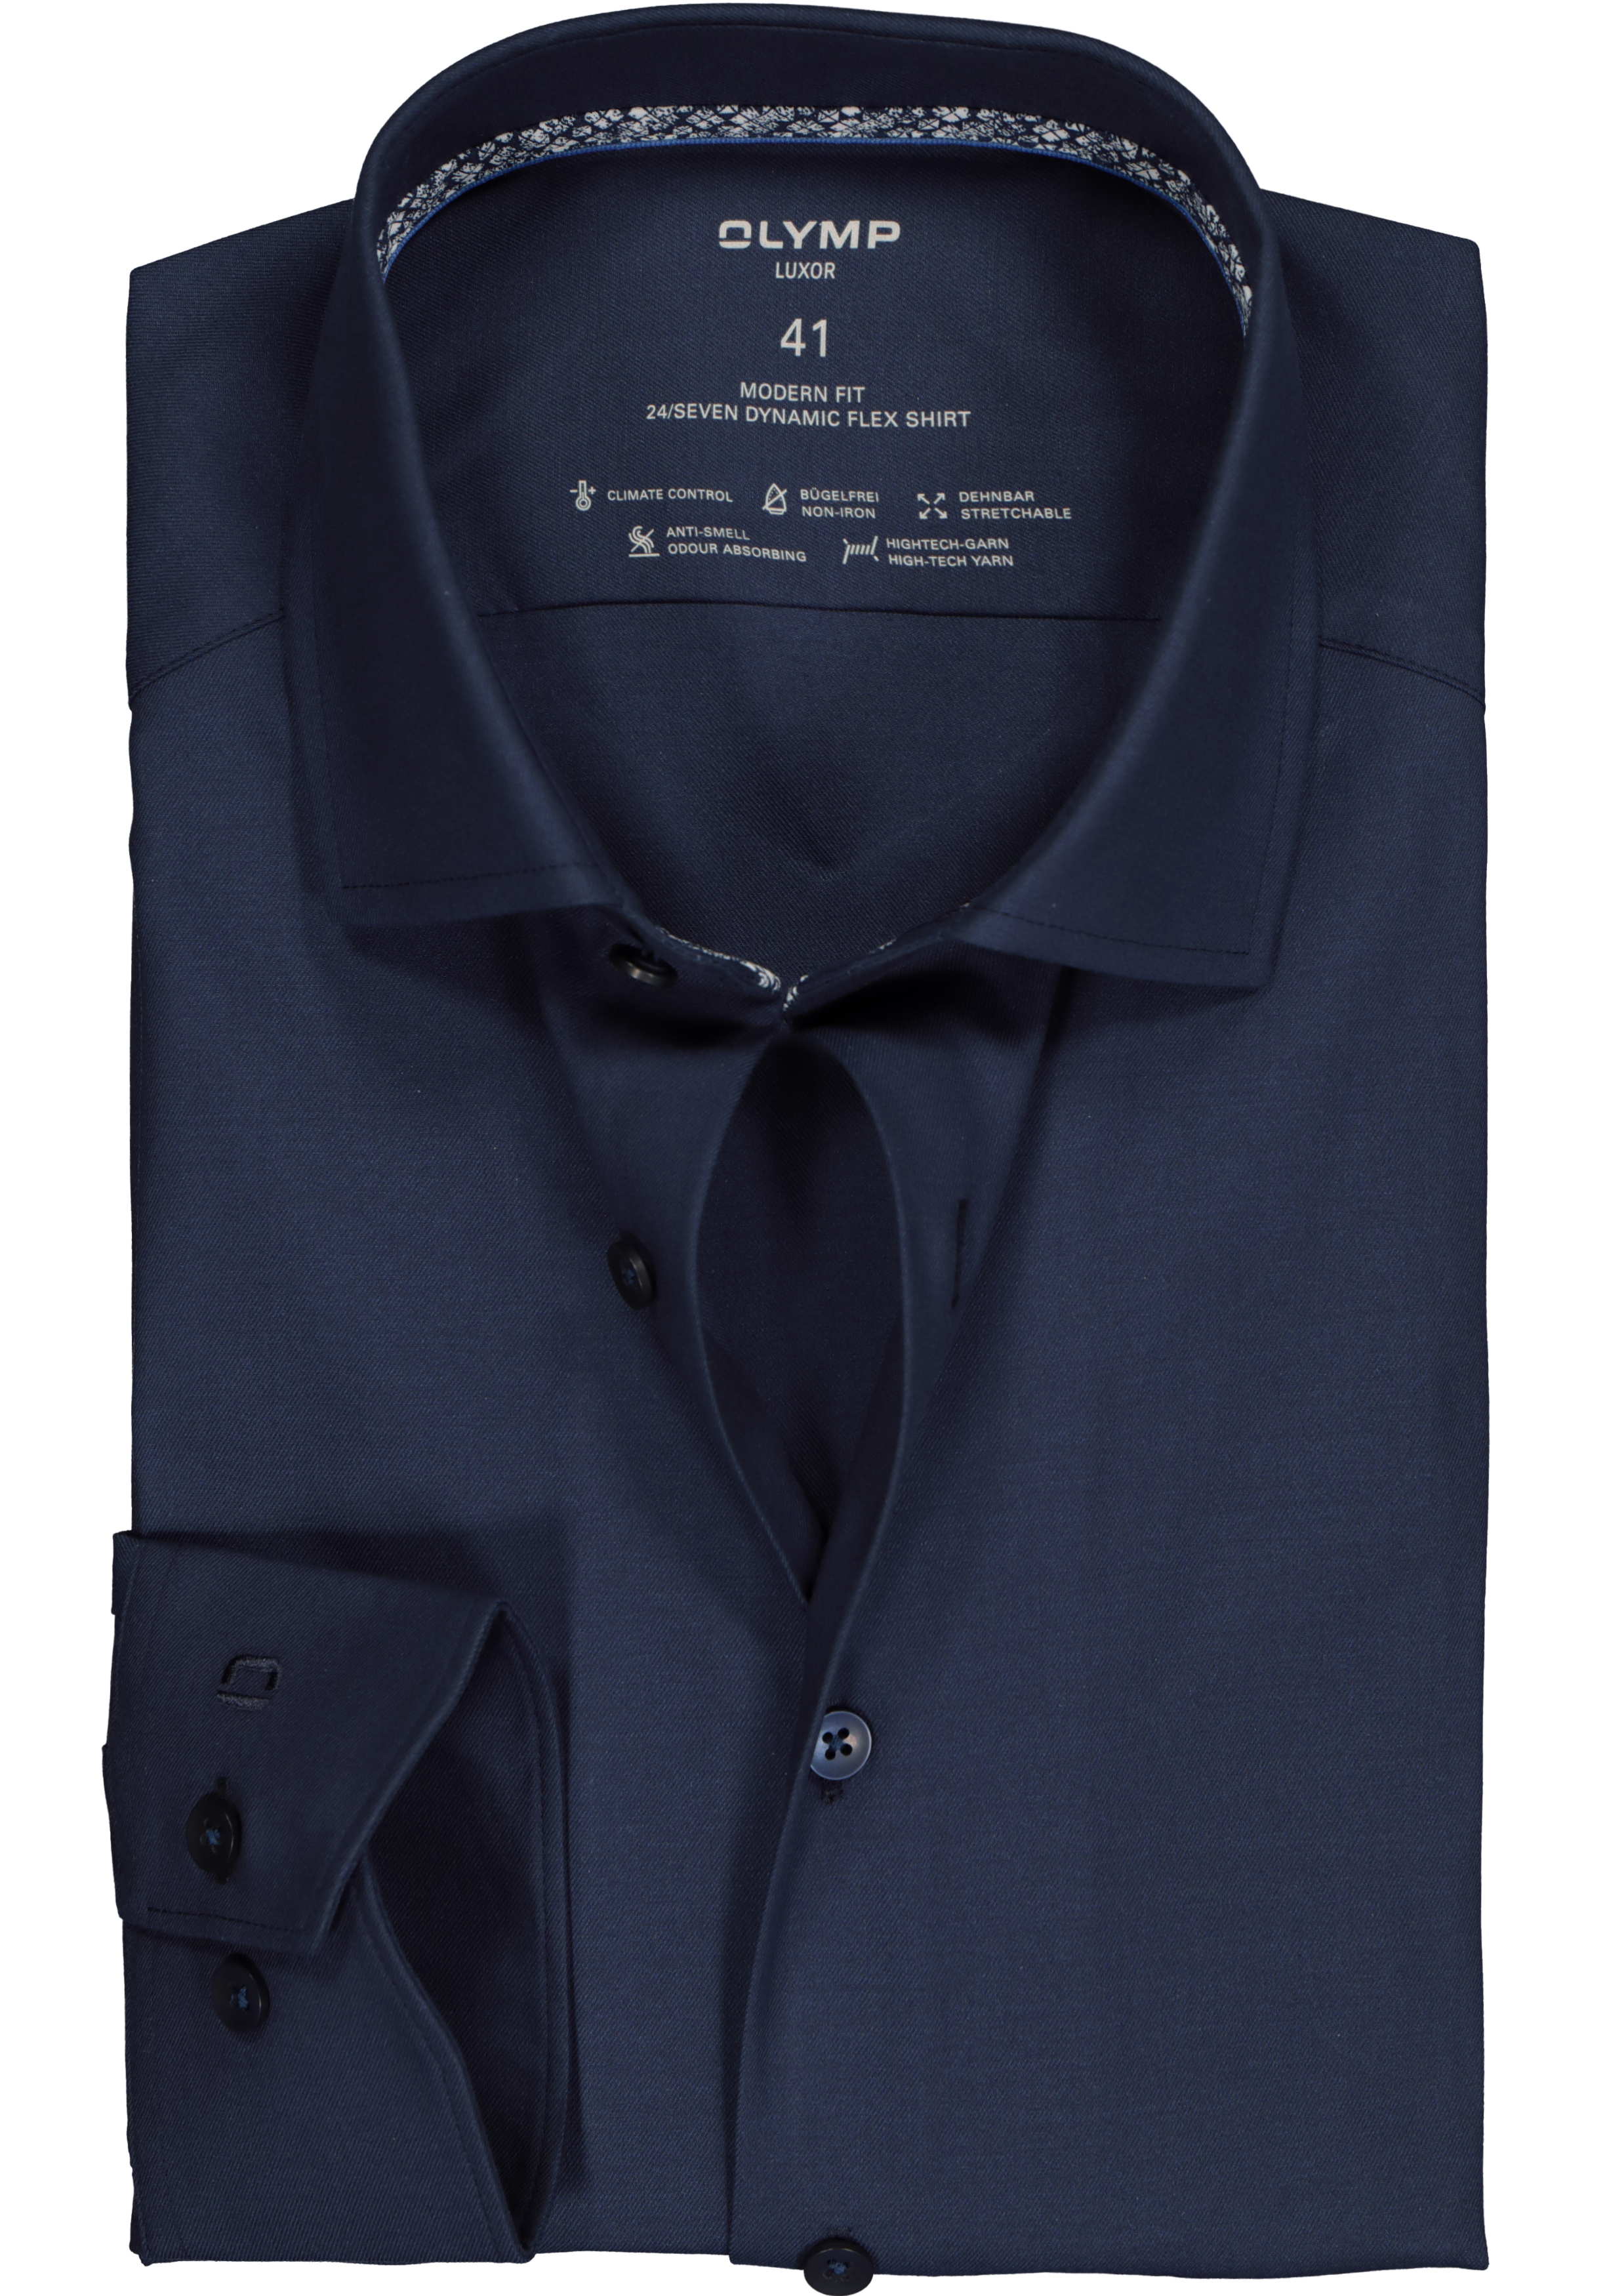 OLYMP 24/7 modern fit overhemd, twill, marine blauw (contrast)